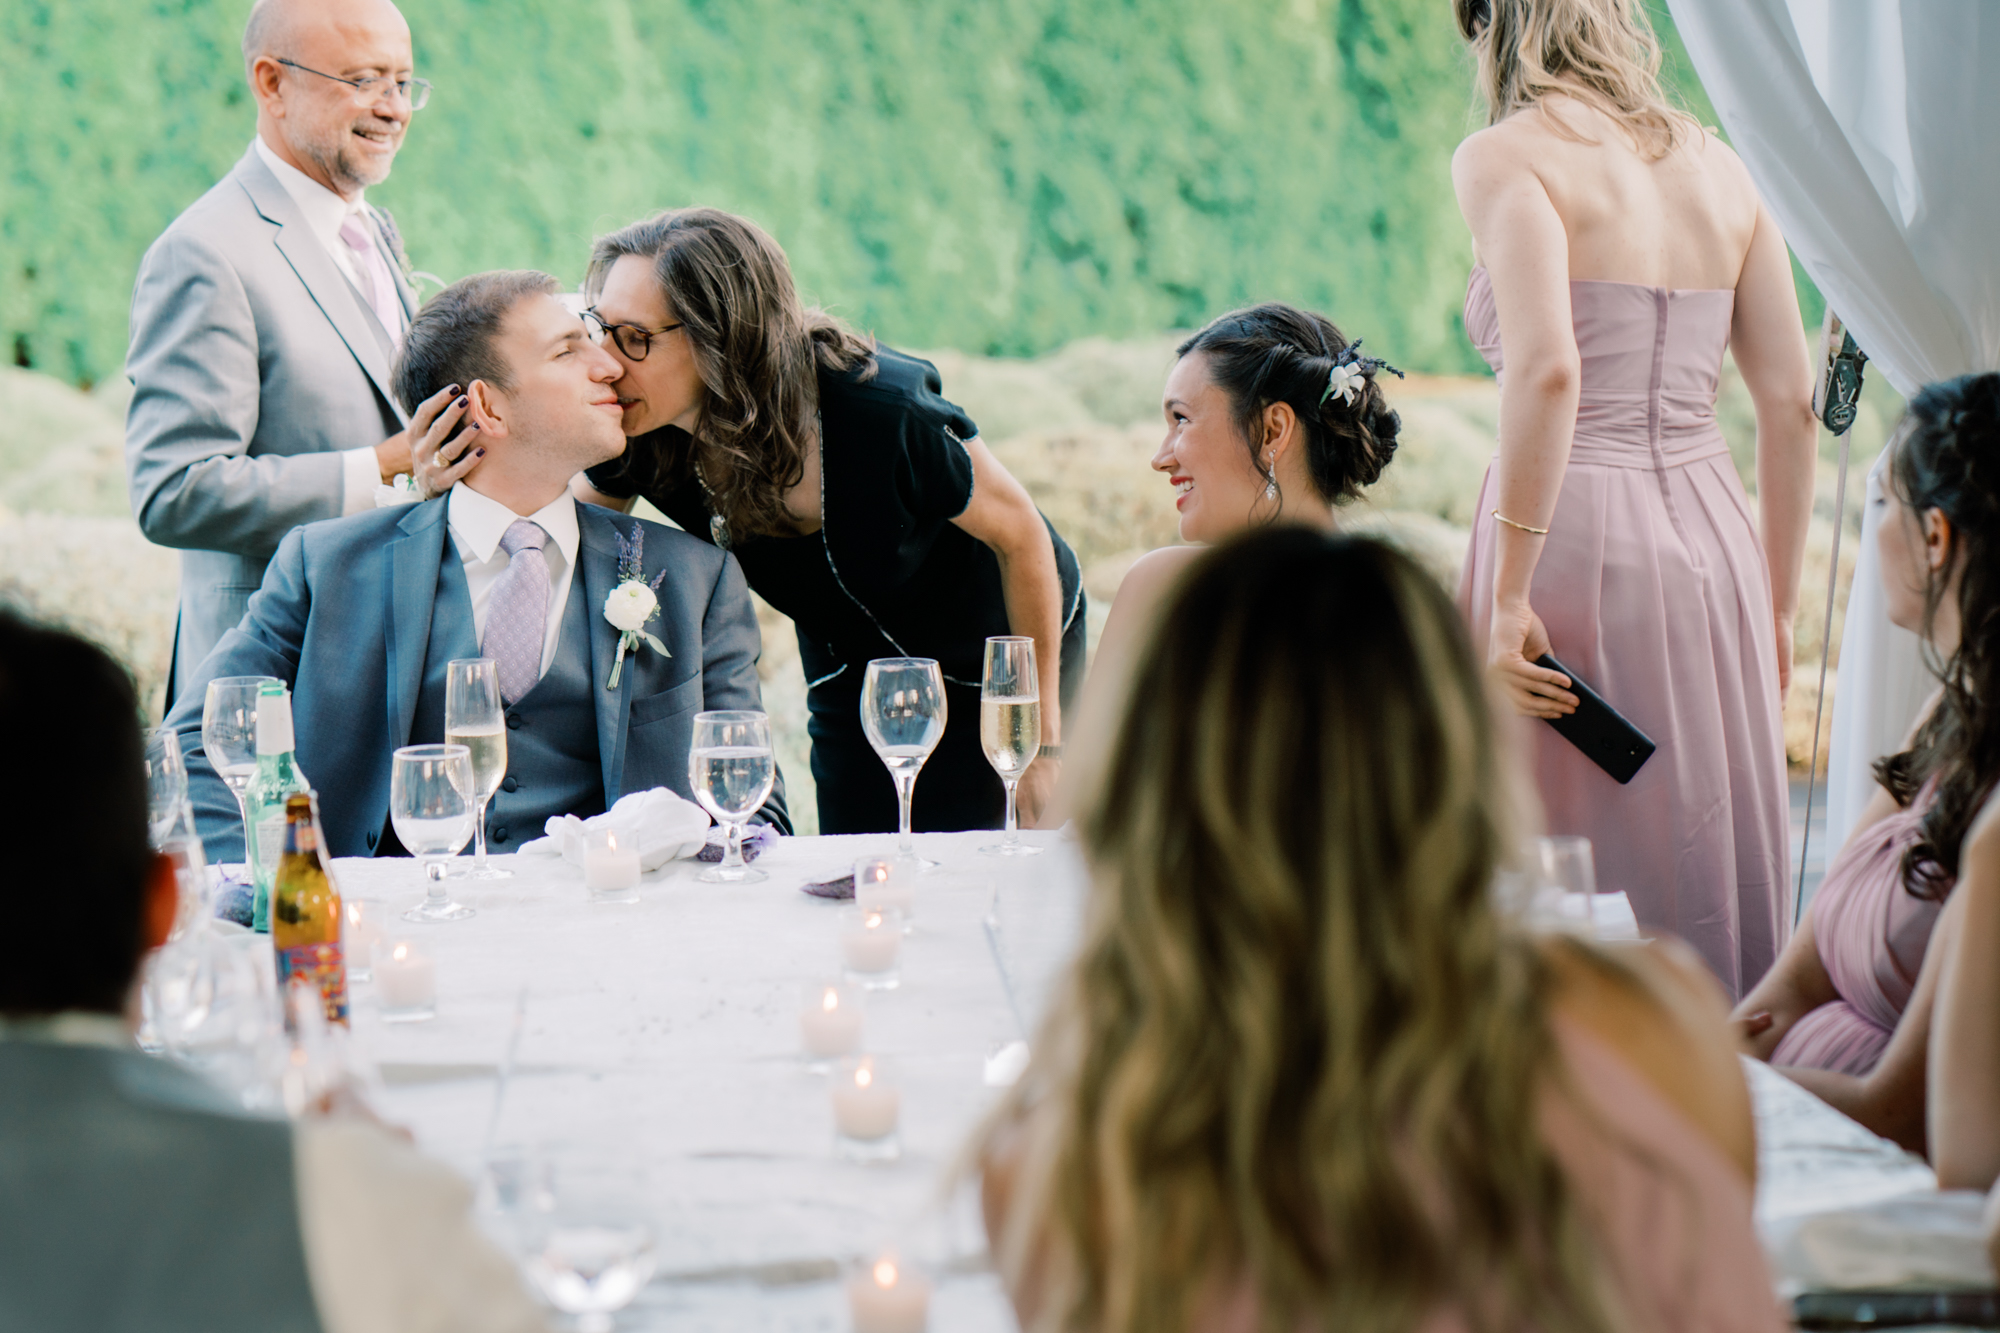 Seattle documentary wedding photographer: Jenn Tai